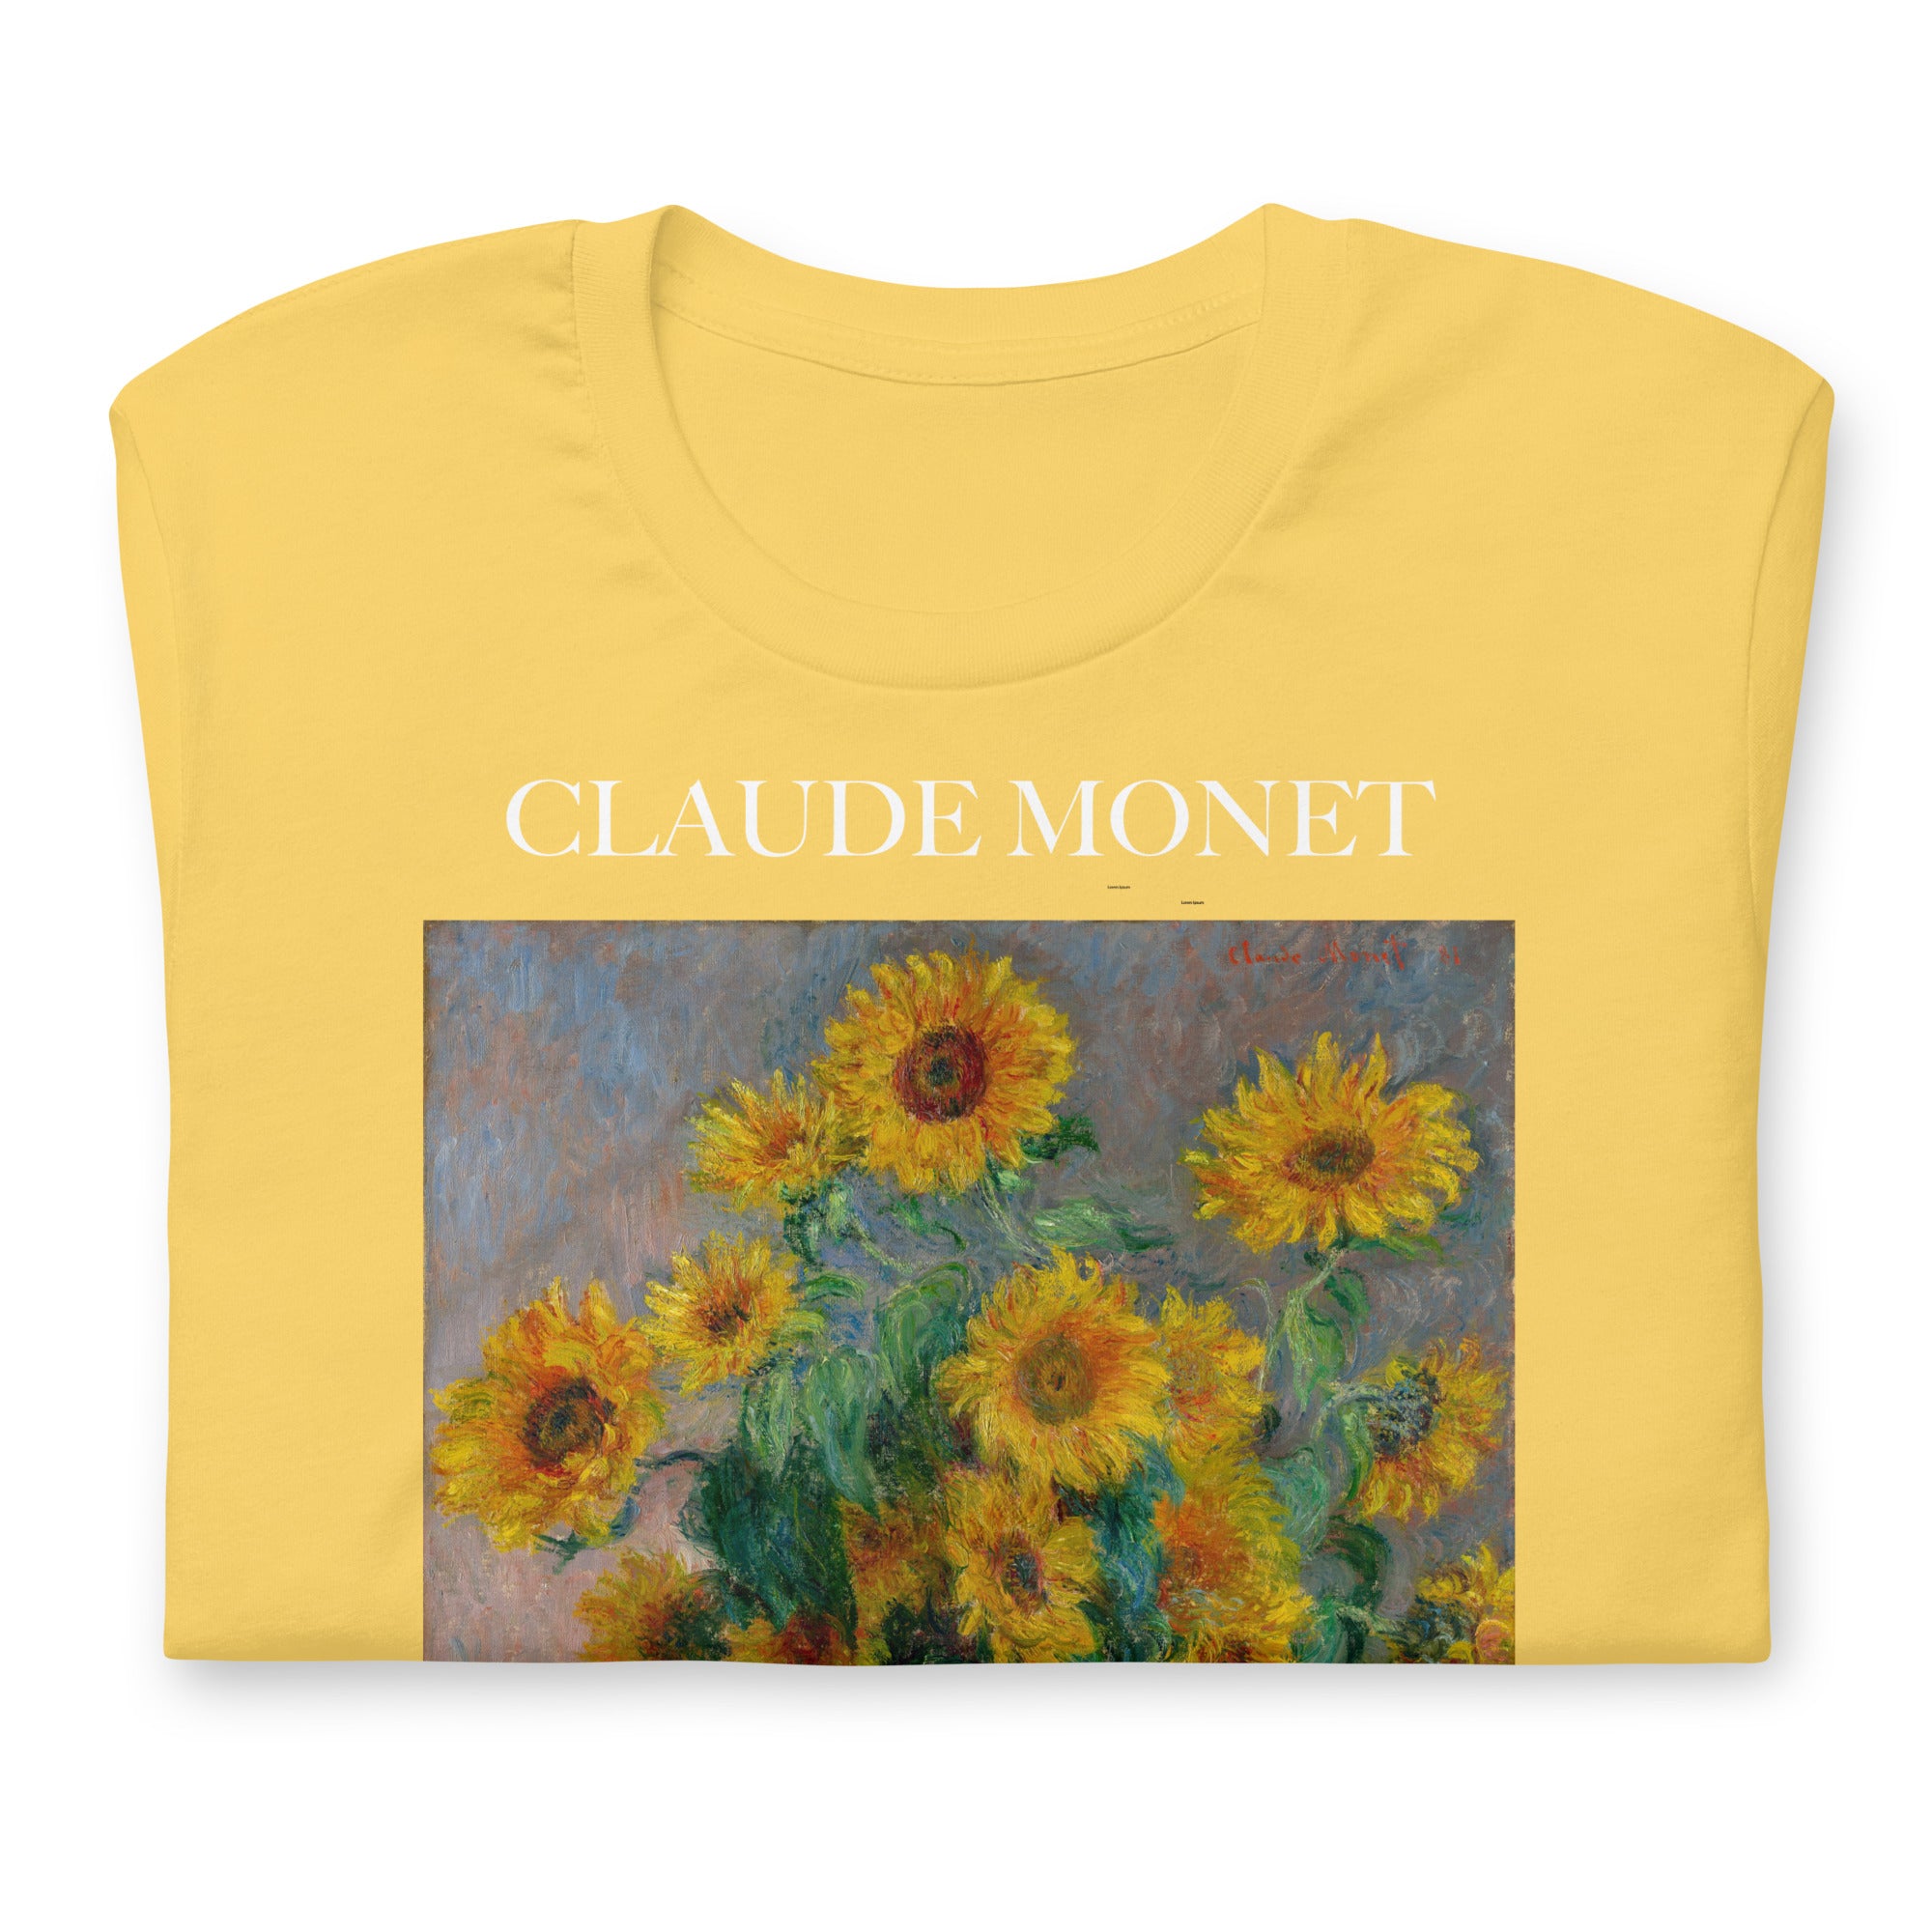 Claude Monet 'Bouquet of Sunflowers' Famous Painting T-Shirt | Unisex Classic Art Tee